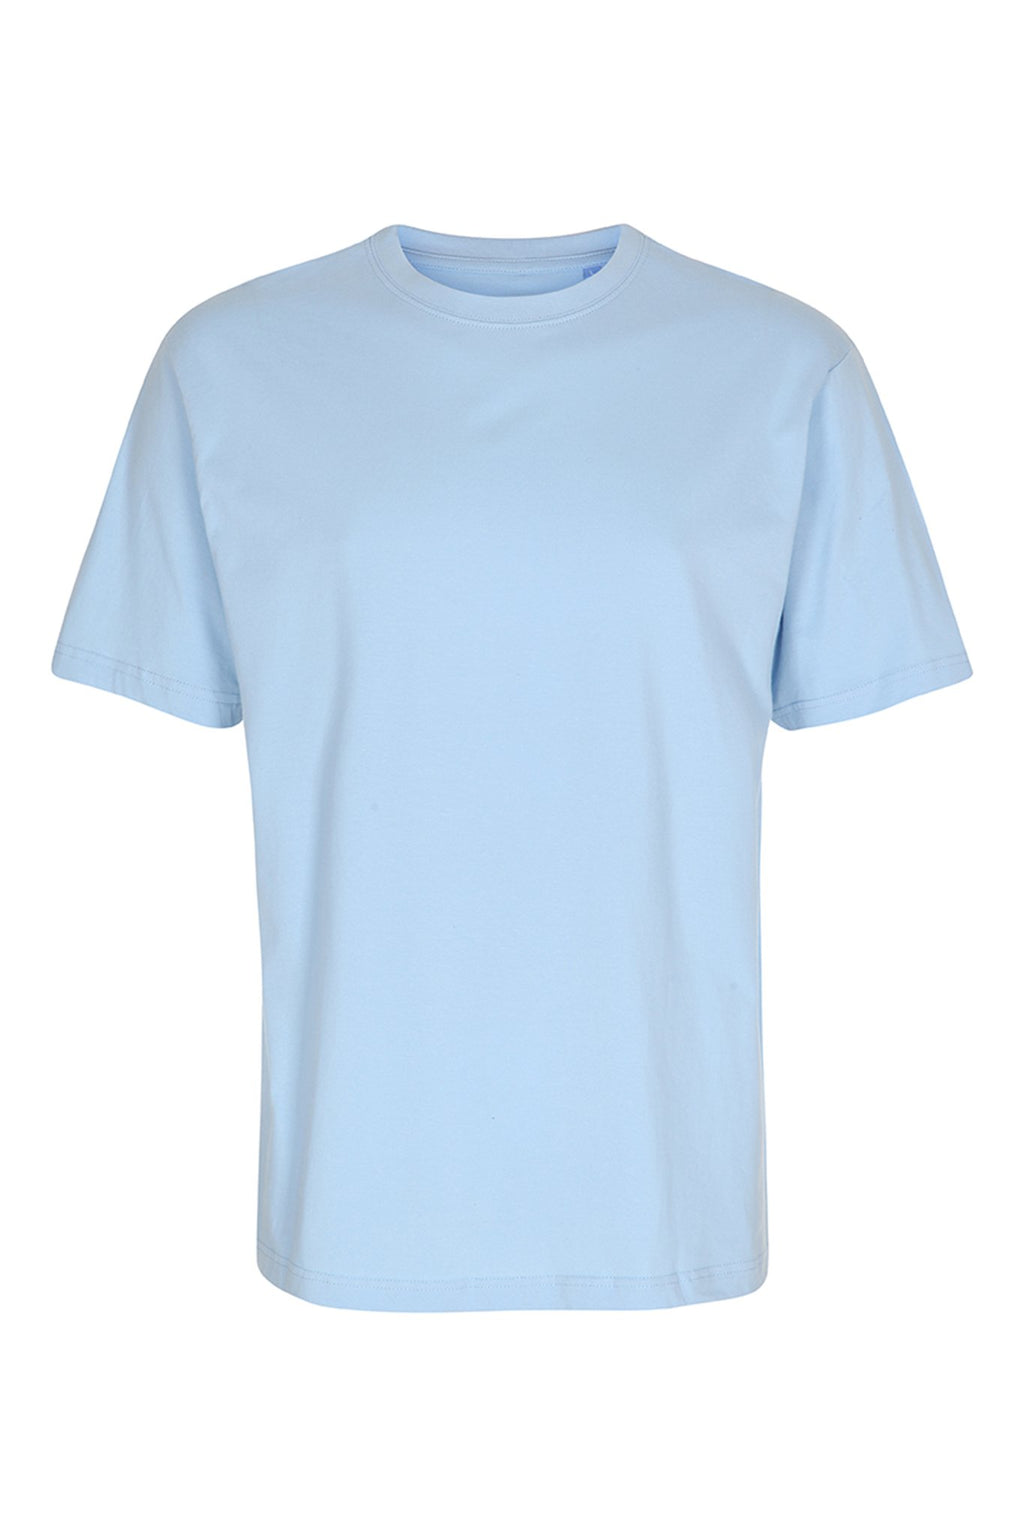 Basic Kids 'T -shirt - lichtblauw